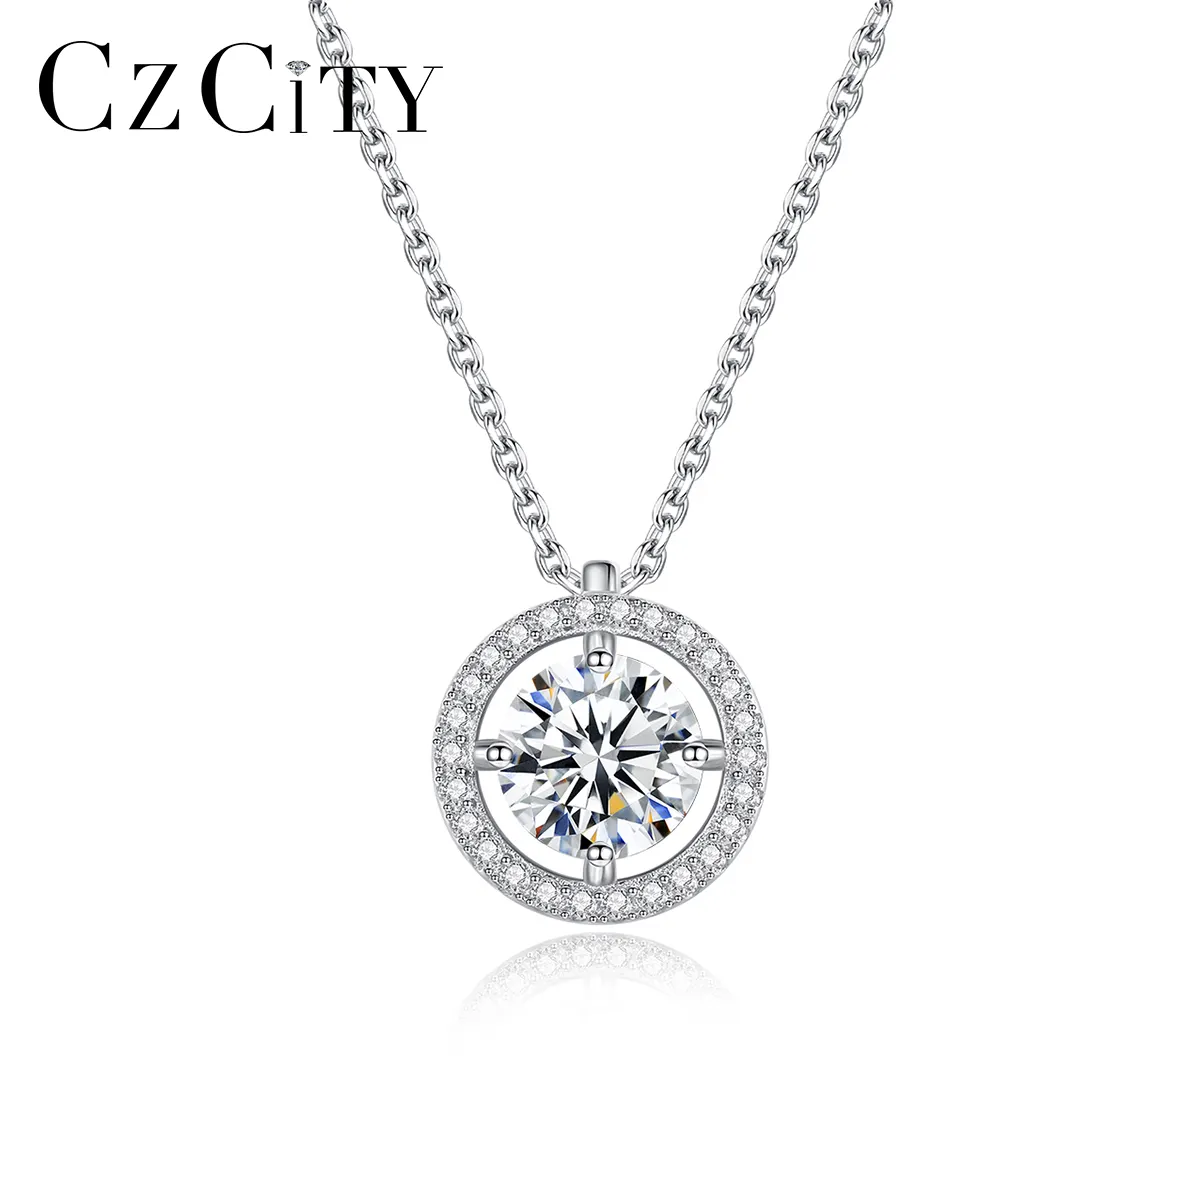 CZCITY Woman Pendant Elegant Wedding Circle Coin Pendant For Making Moissanite Diamond Necklace